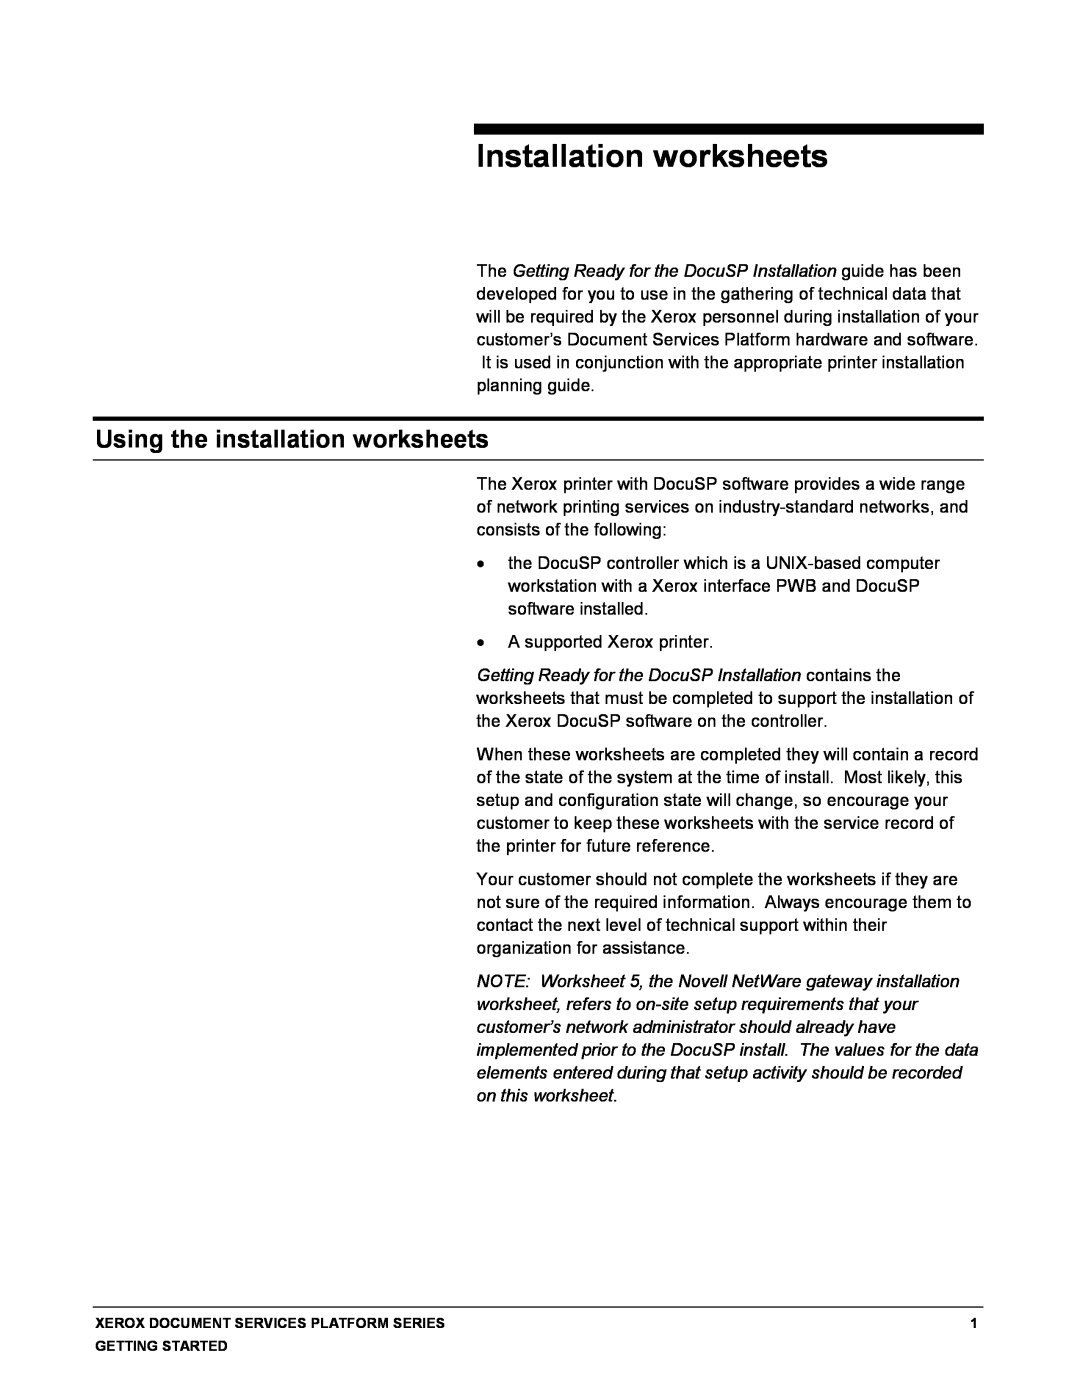 Xerox 701P38969 manual Installation worksheets, Using the installation worksheets 